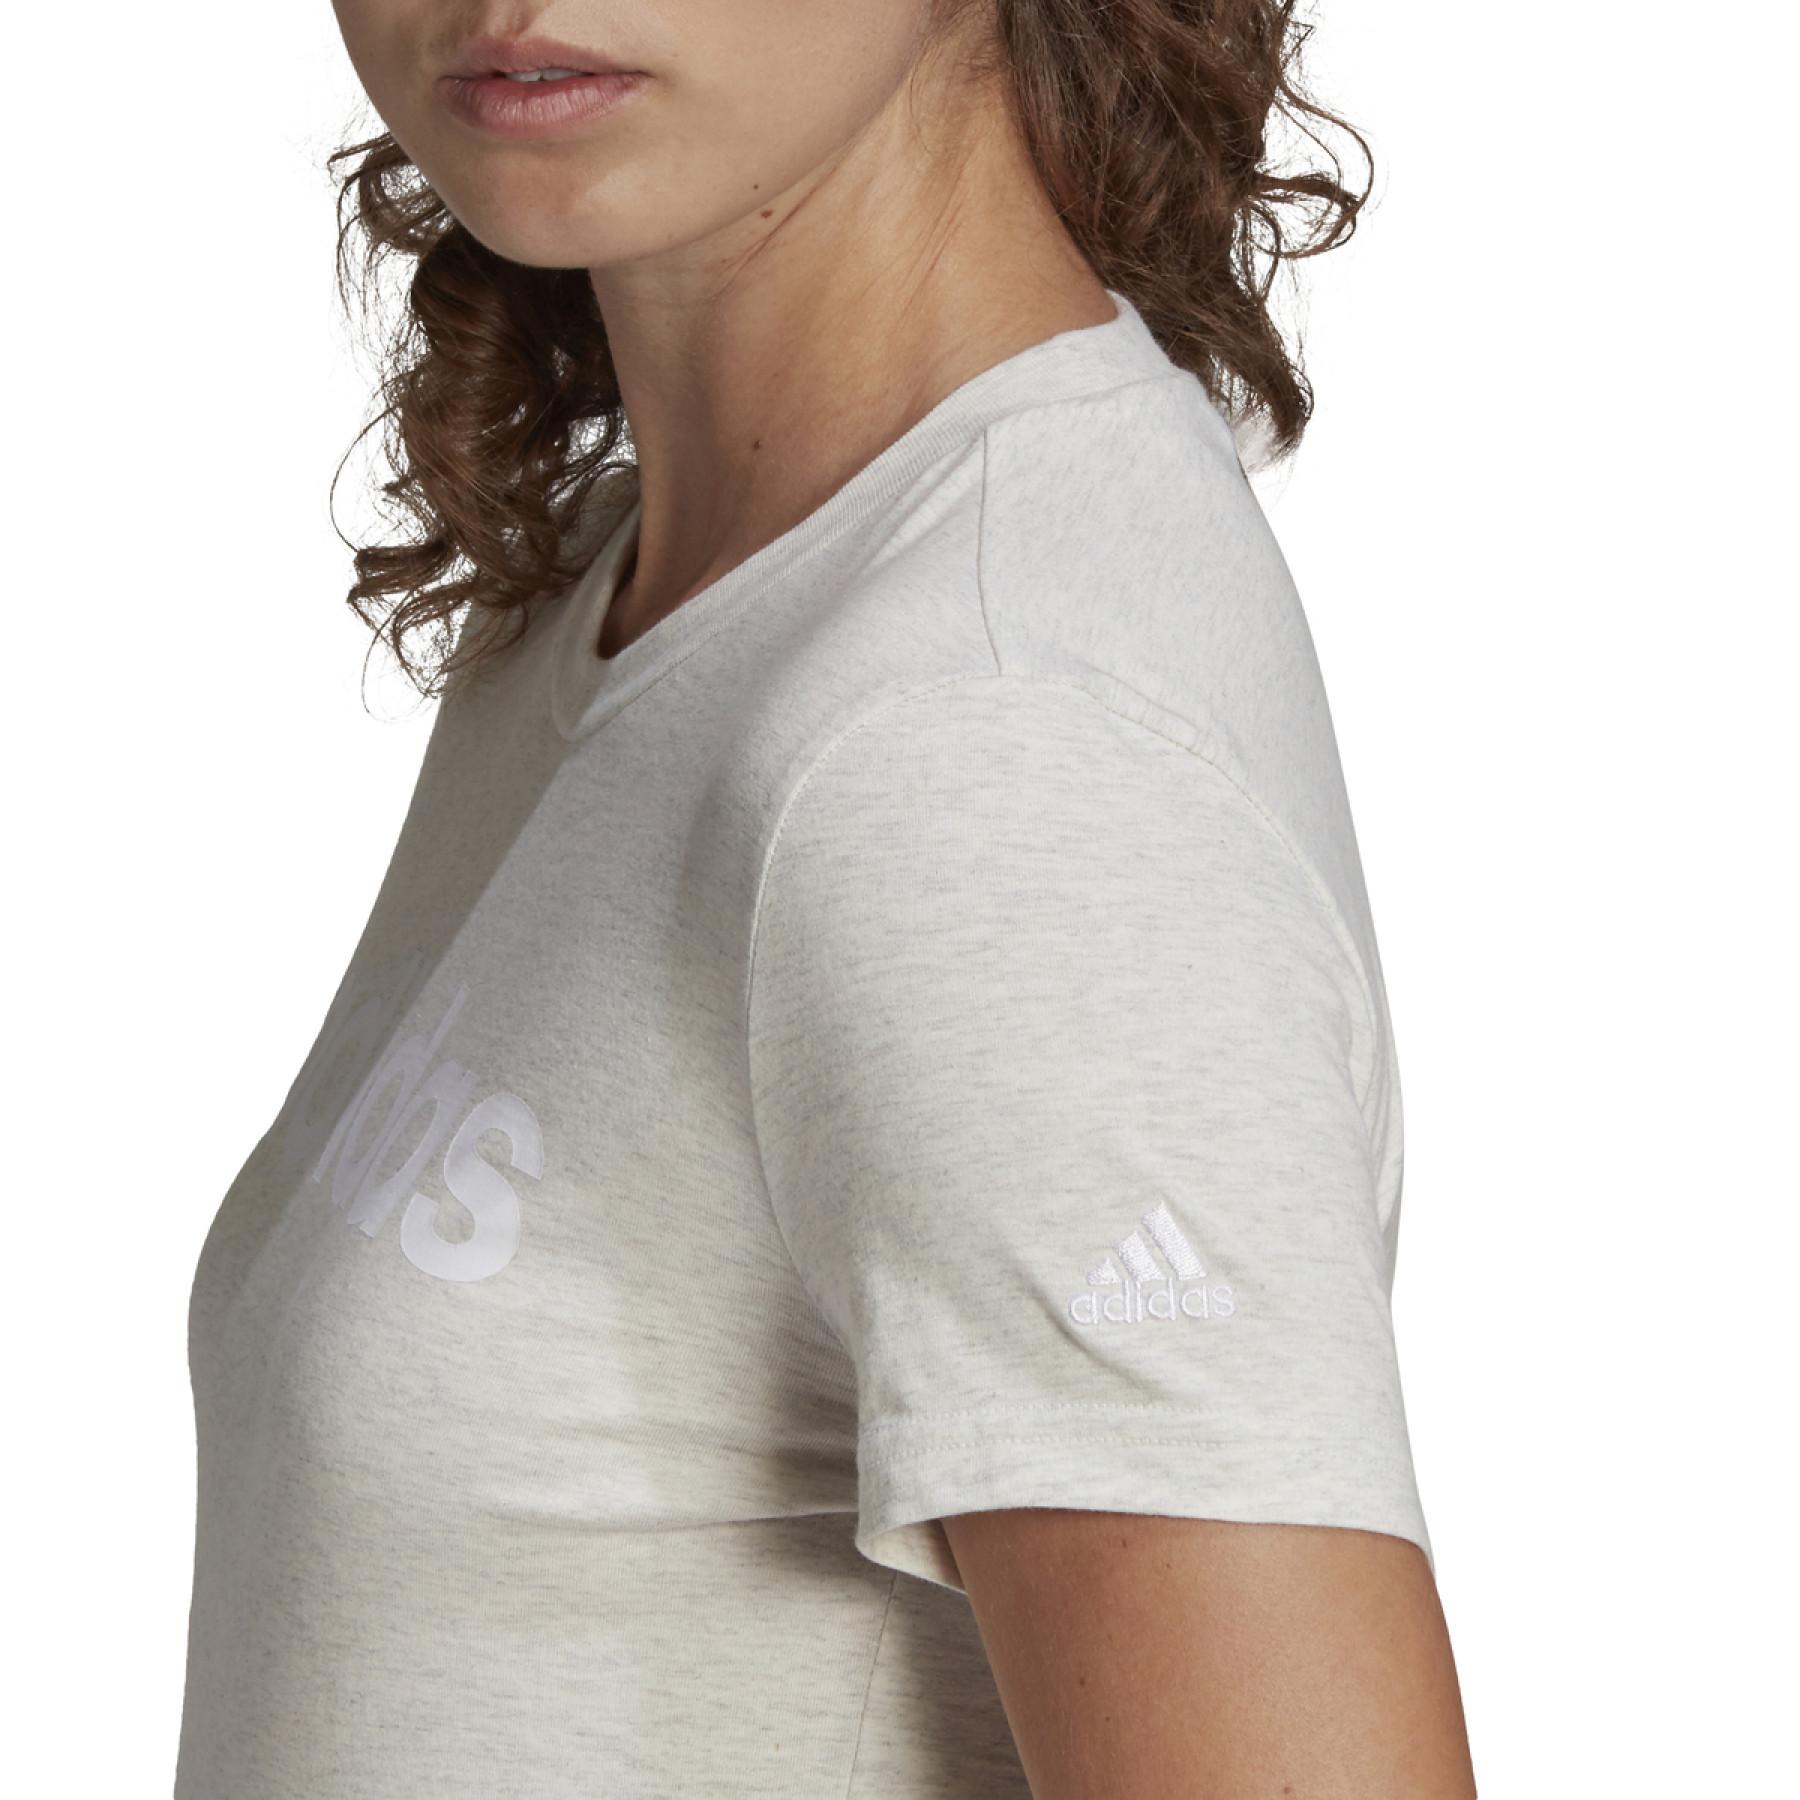 Women's T-shirt adidas Essentials Slim Logo